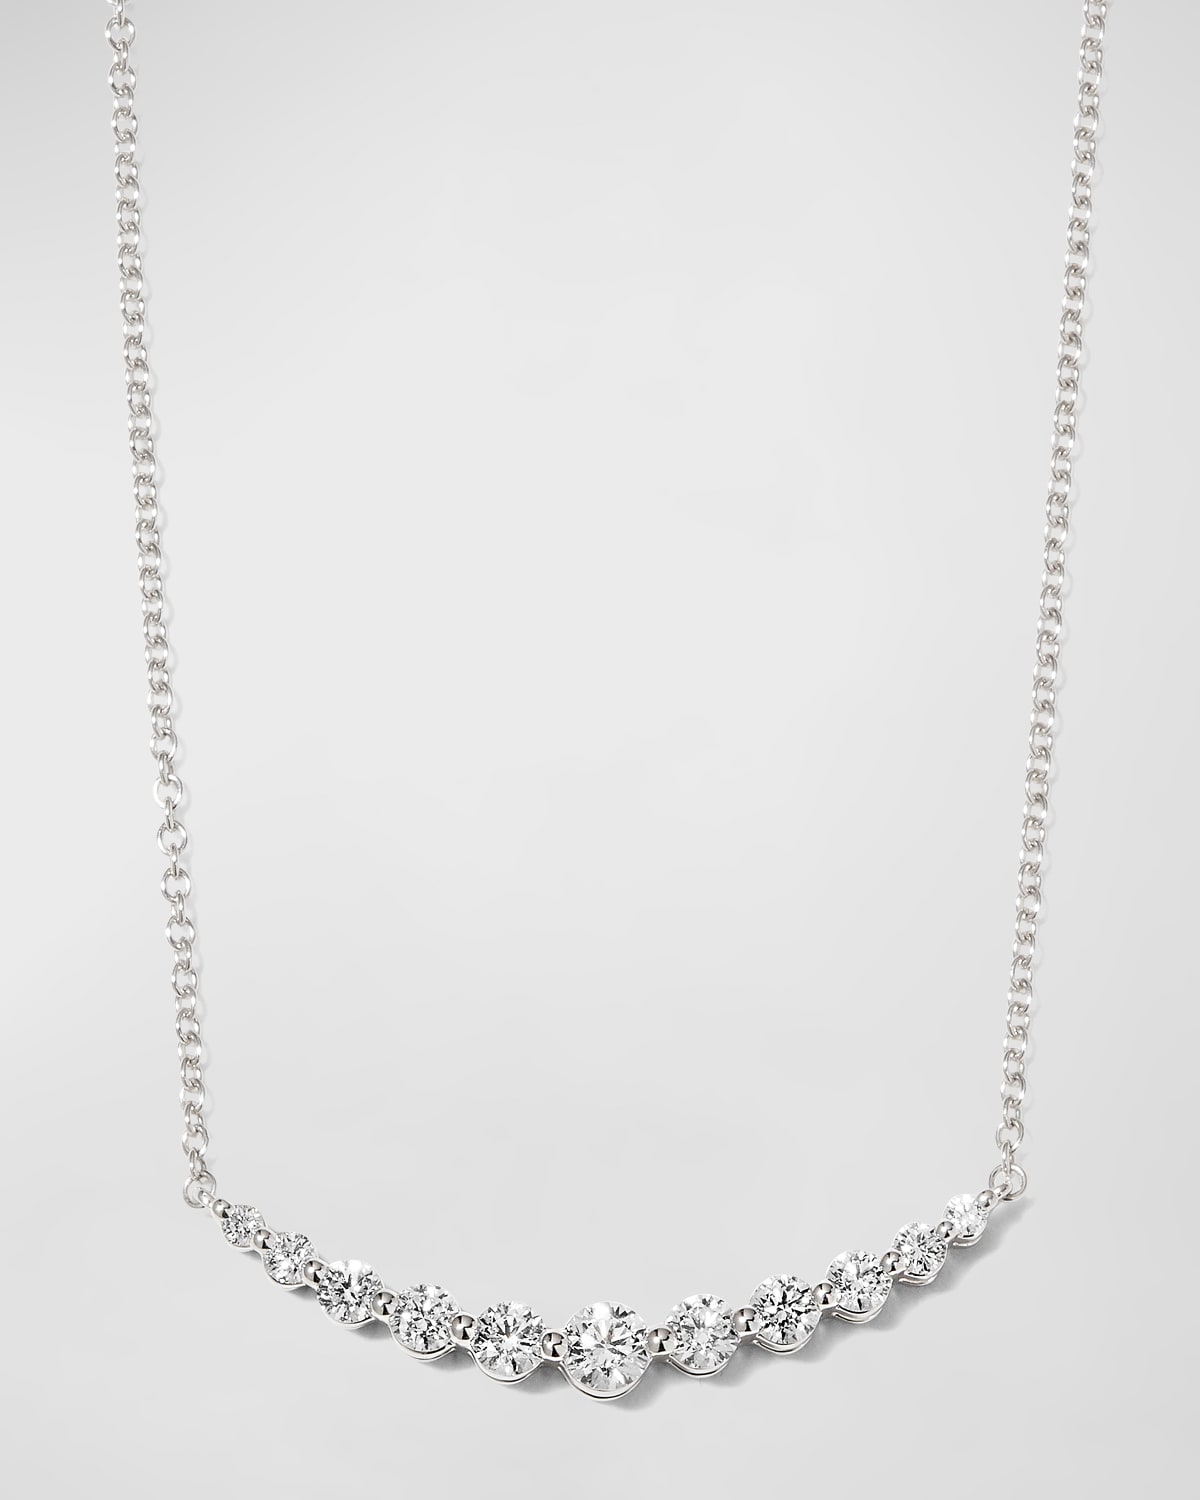 White Gold Round 11-Diamond Necklace, 18"L